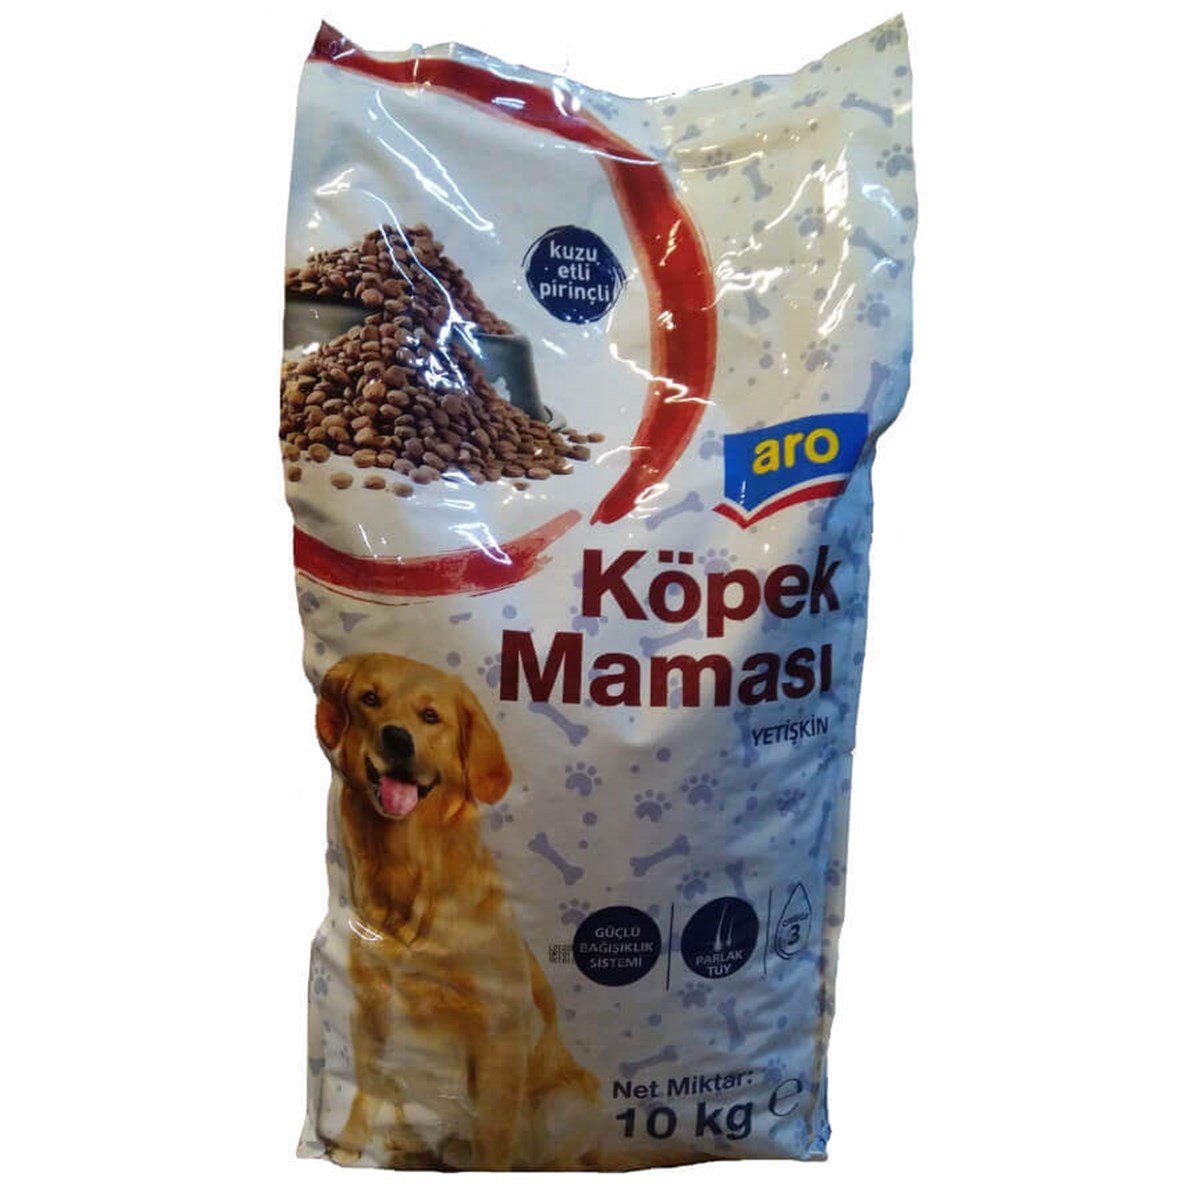 Aro Köpek Maması 10kg Kuzu Etli Pirinçli